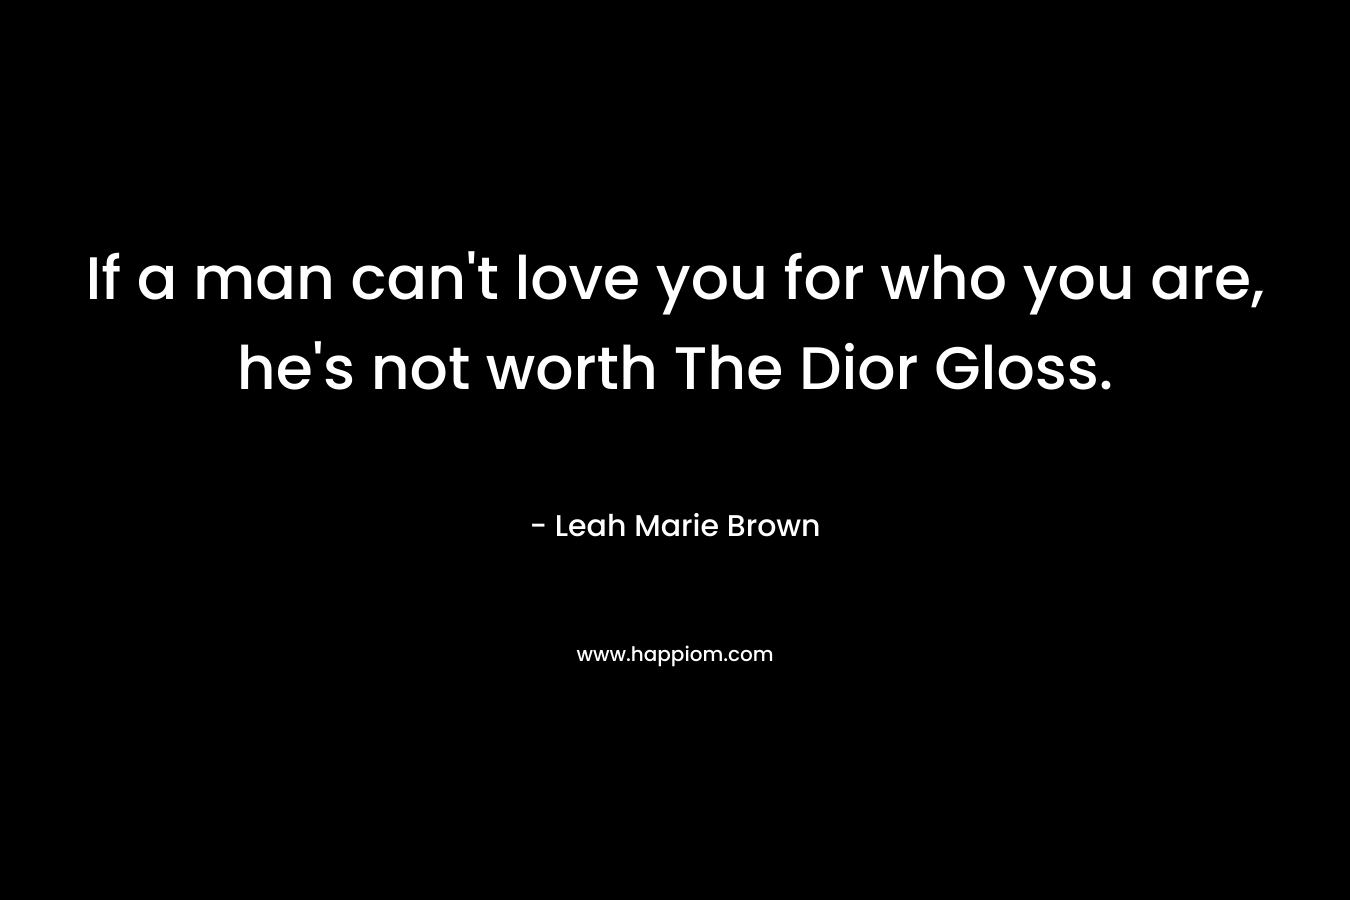 If a man can't love you for who you are, he's not worth The Dior Gloss.